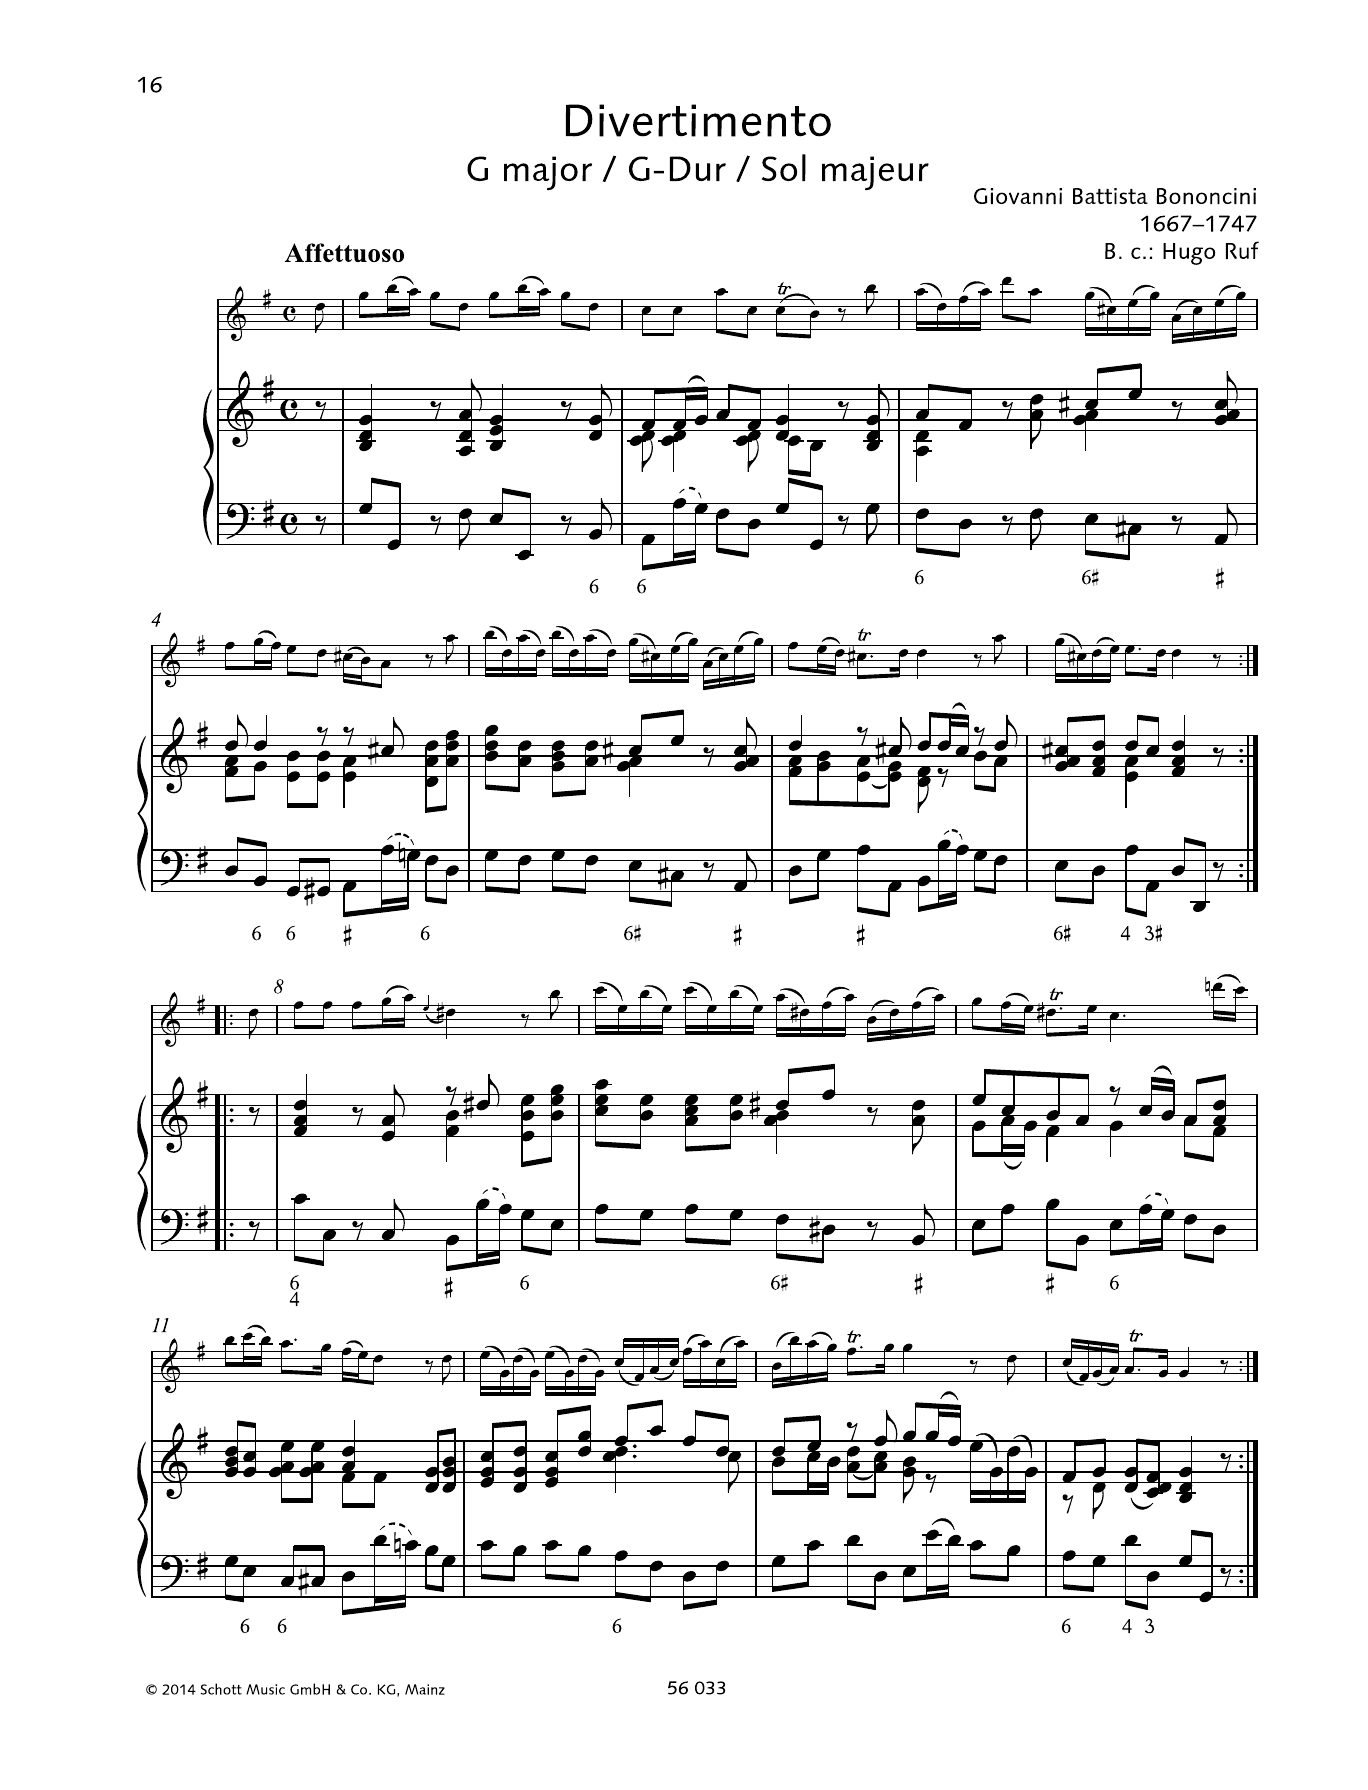 Giovanni Battista Bononcini Divertimento G major Sheet Music Notes & Chords for Woodwind Solo - Download or Print PDF